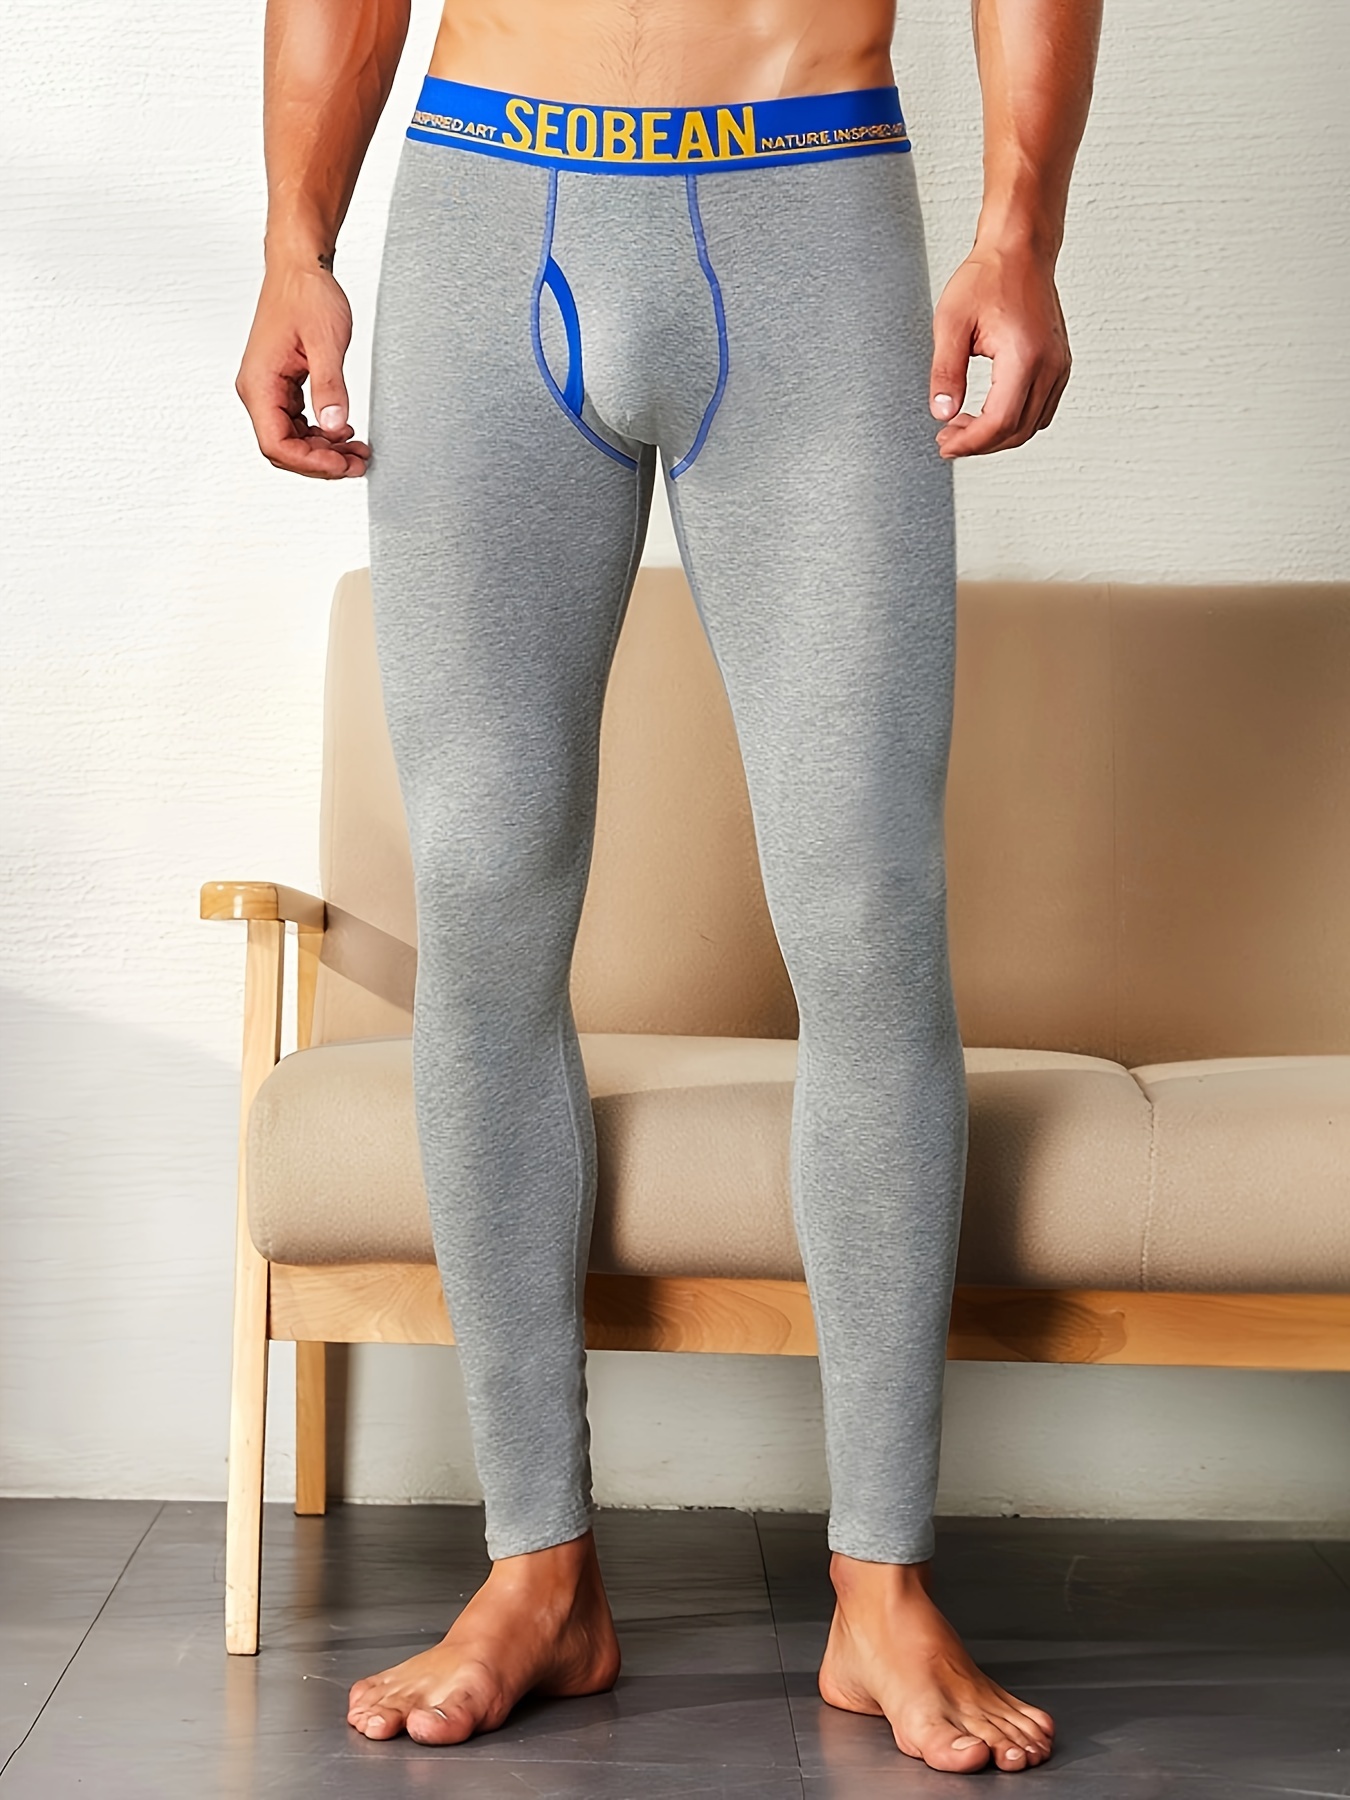 Grey Men's Sexy leggings